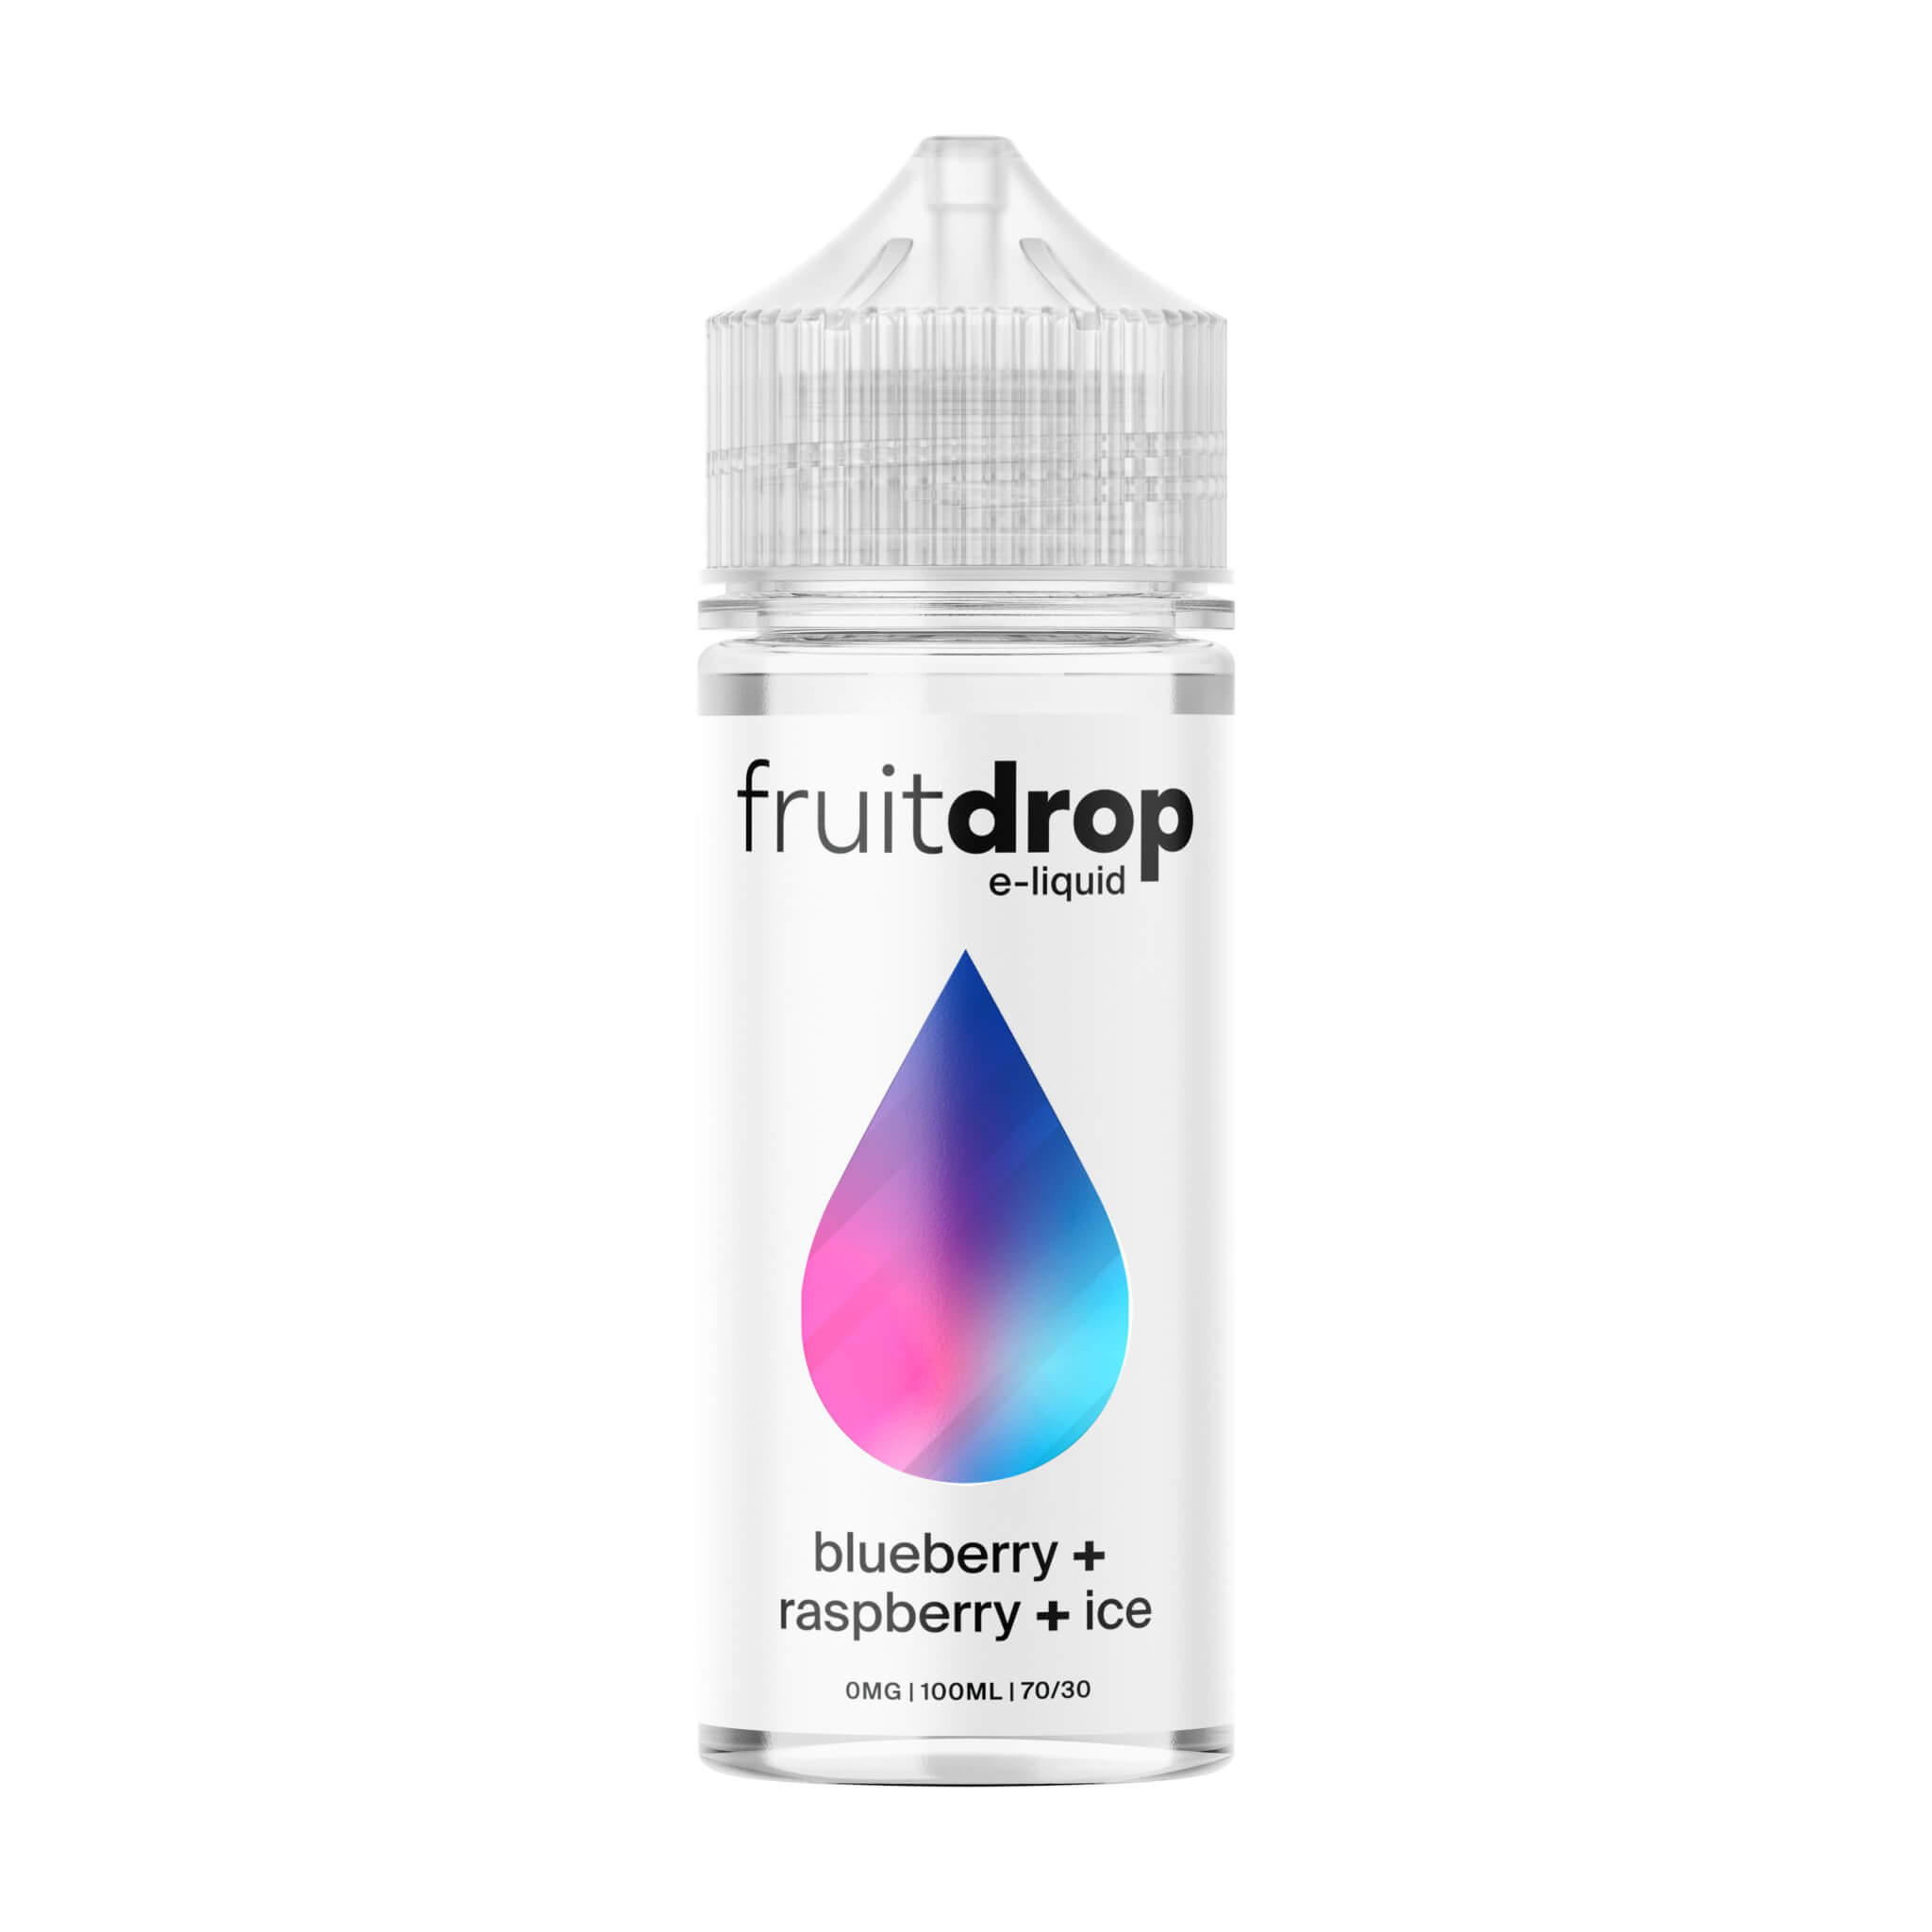 Fruit drop e-liquid blueberry, raspberry & ice 100ml 70/30 shortfill e-liquid available at dispergo vaping uk